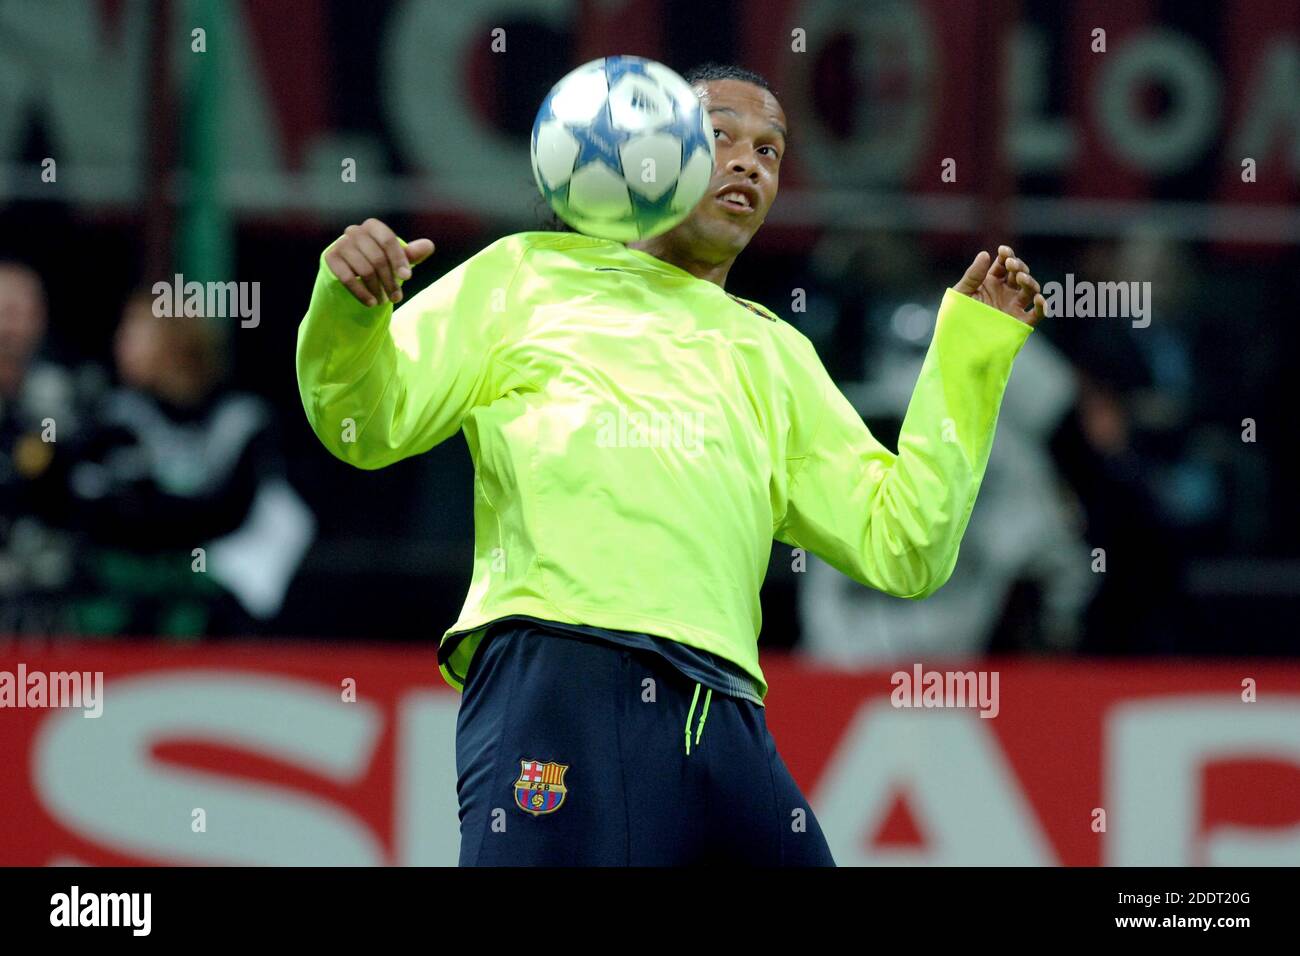 Ronaldinho Gaucho (Superstars of Soccer)